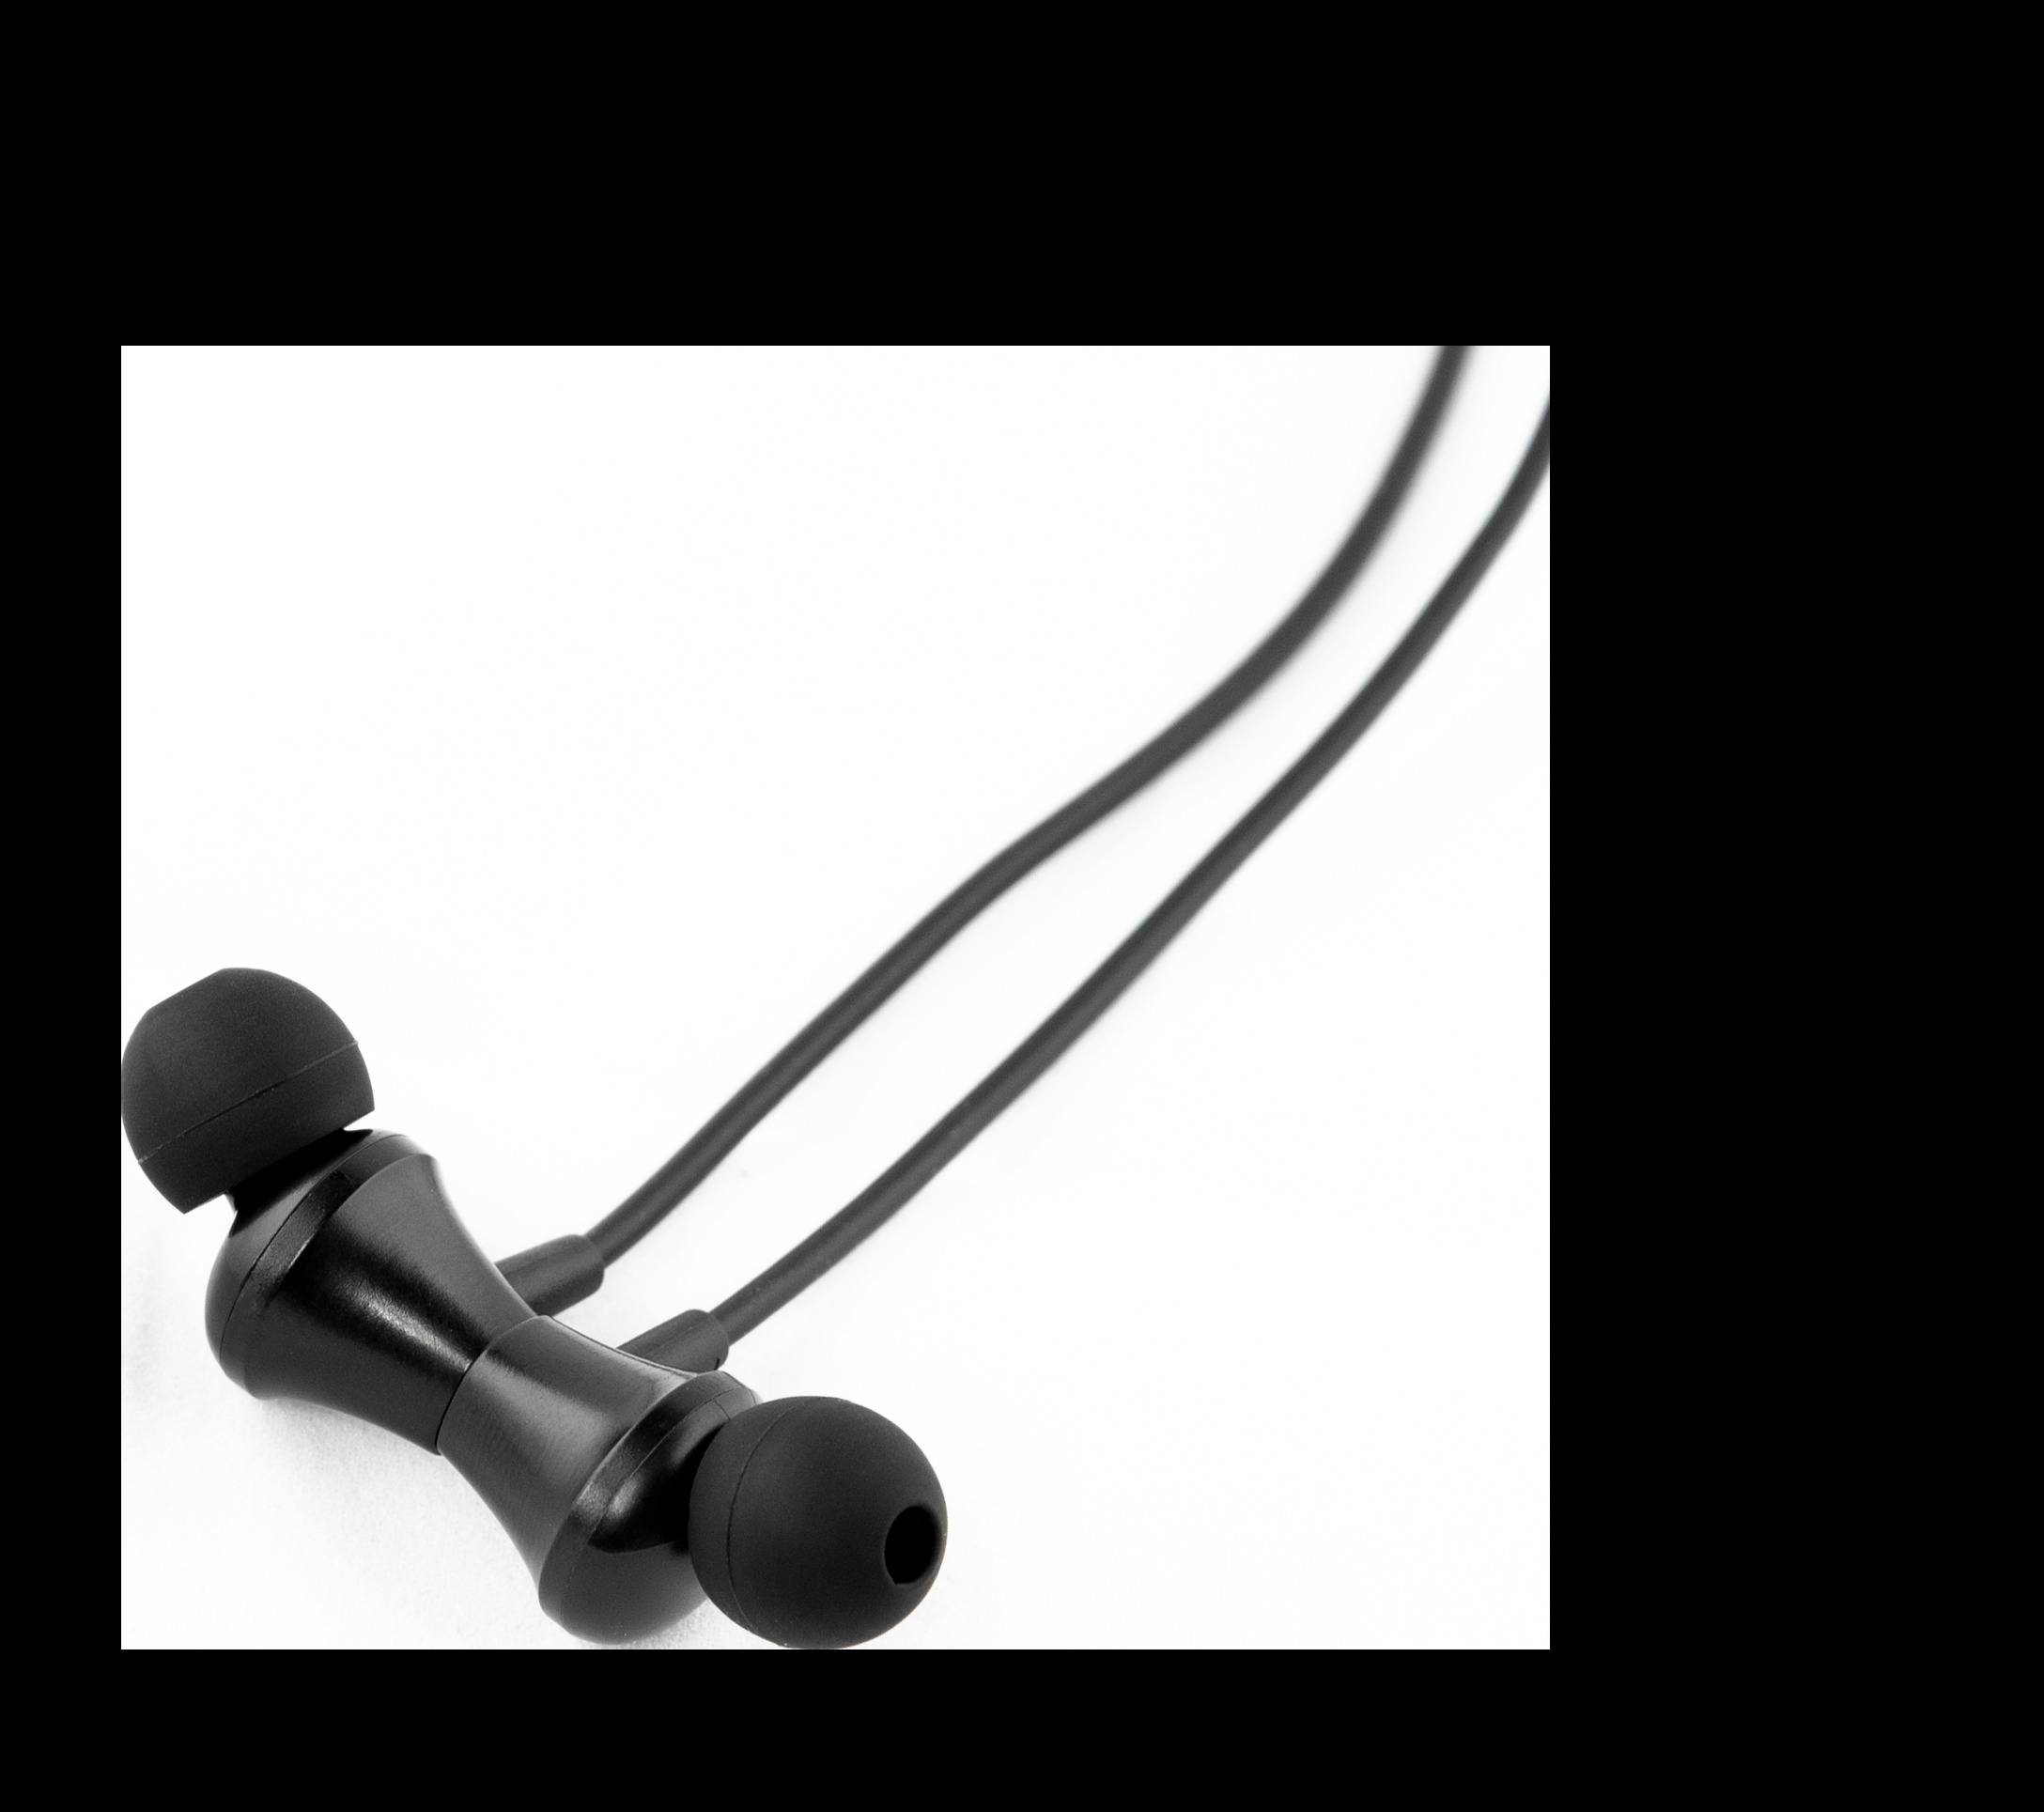 IBH-3001, Bluetooth Kopfhörer ISY In-ear Schwarz